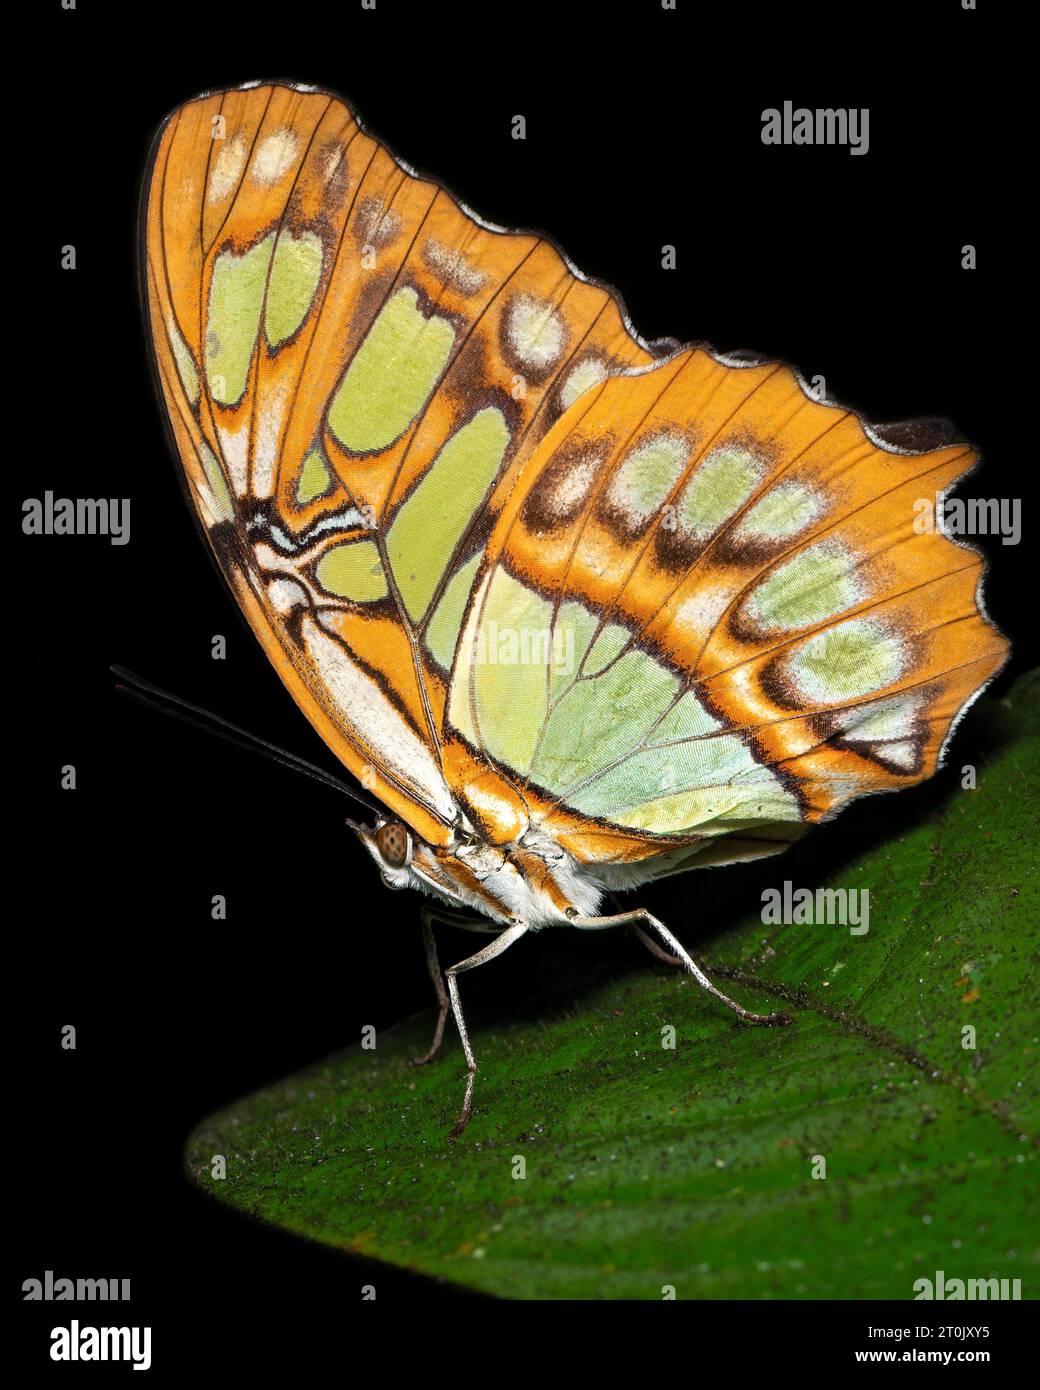 JoyJolt Meadow Butterfly Collection European Crystal Stemmed